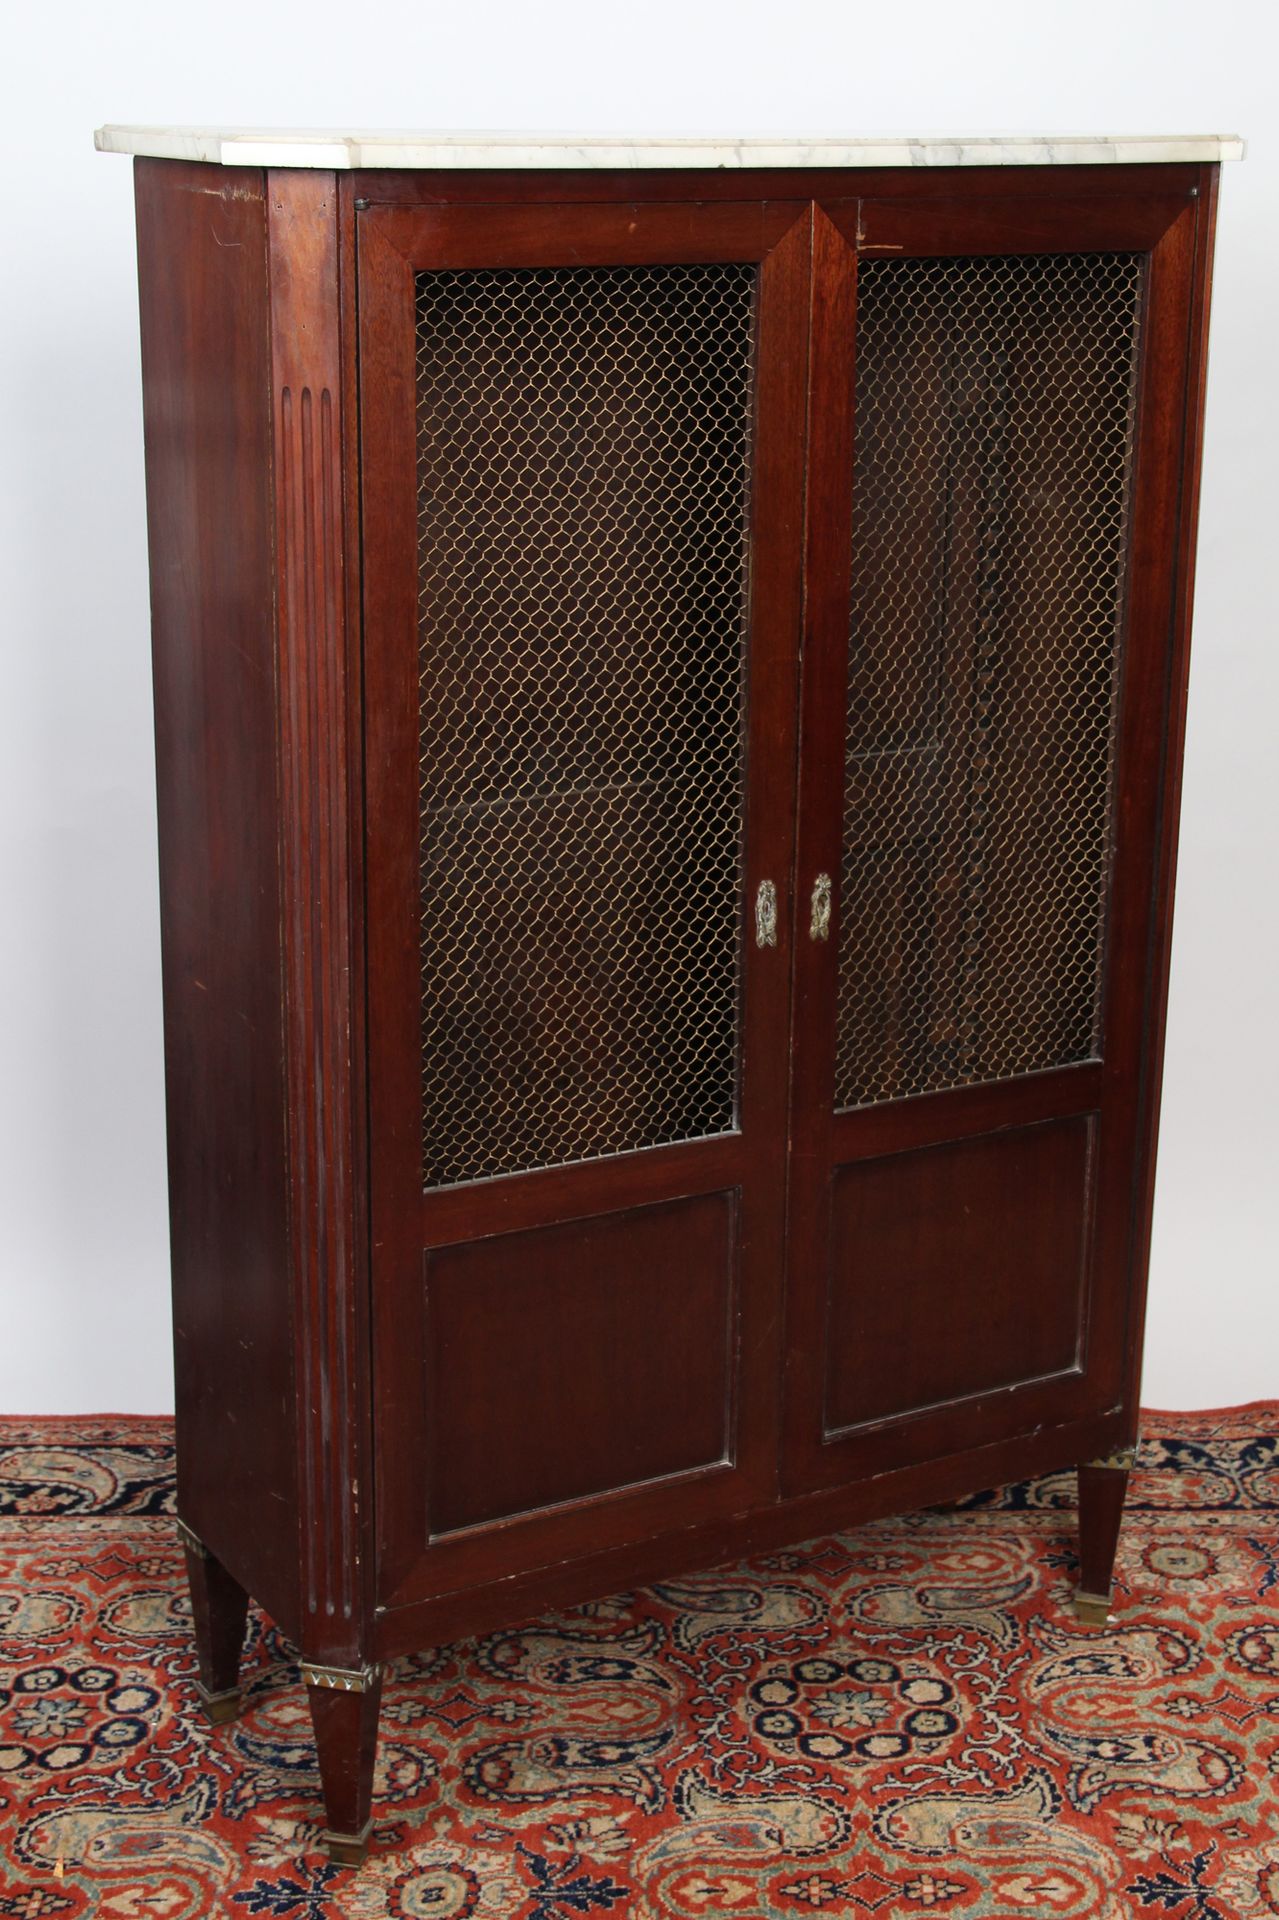 Null WINDOW

in mahogany and mahogany veneer, opening with two latticed doors, f&hellip;